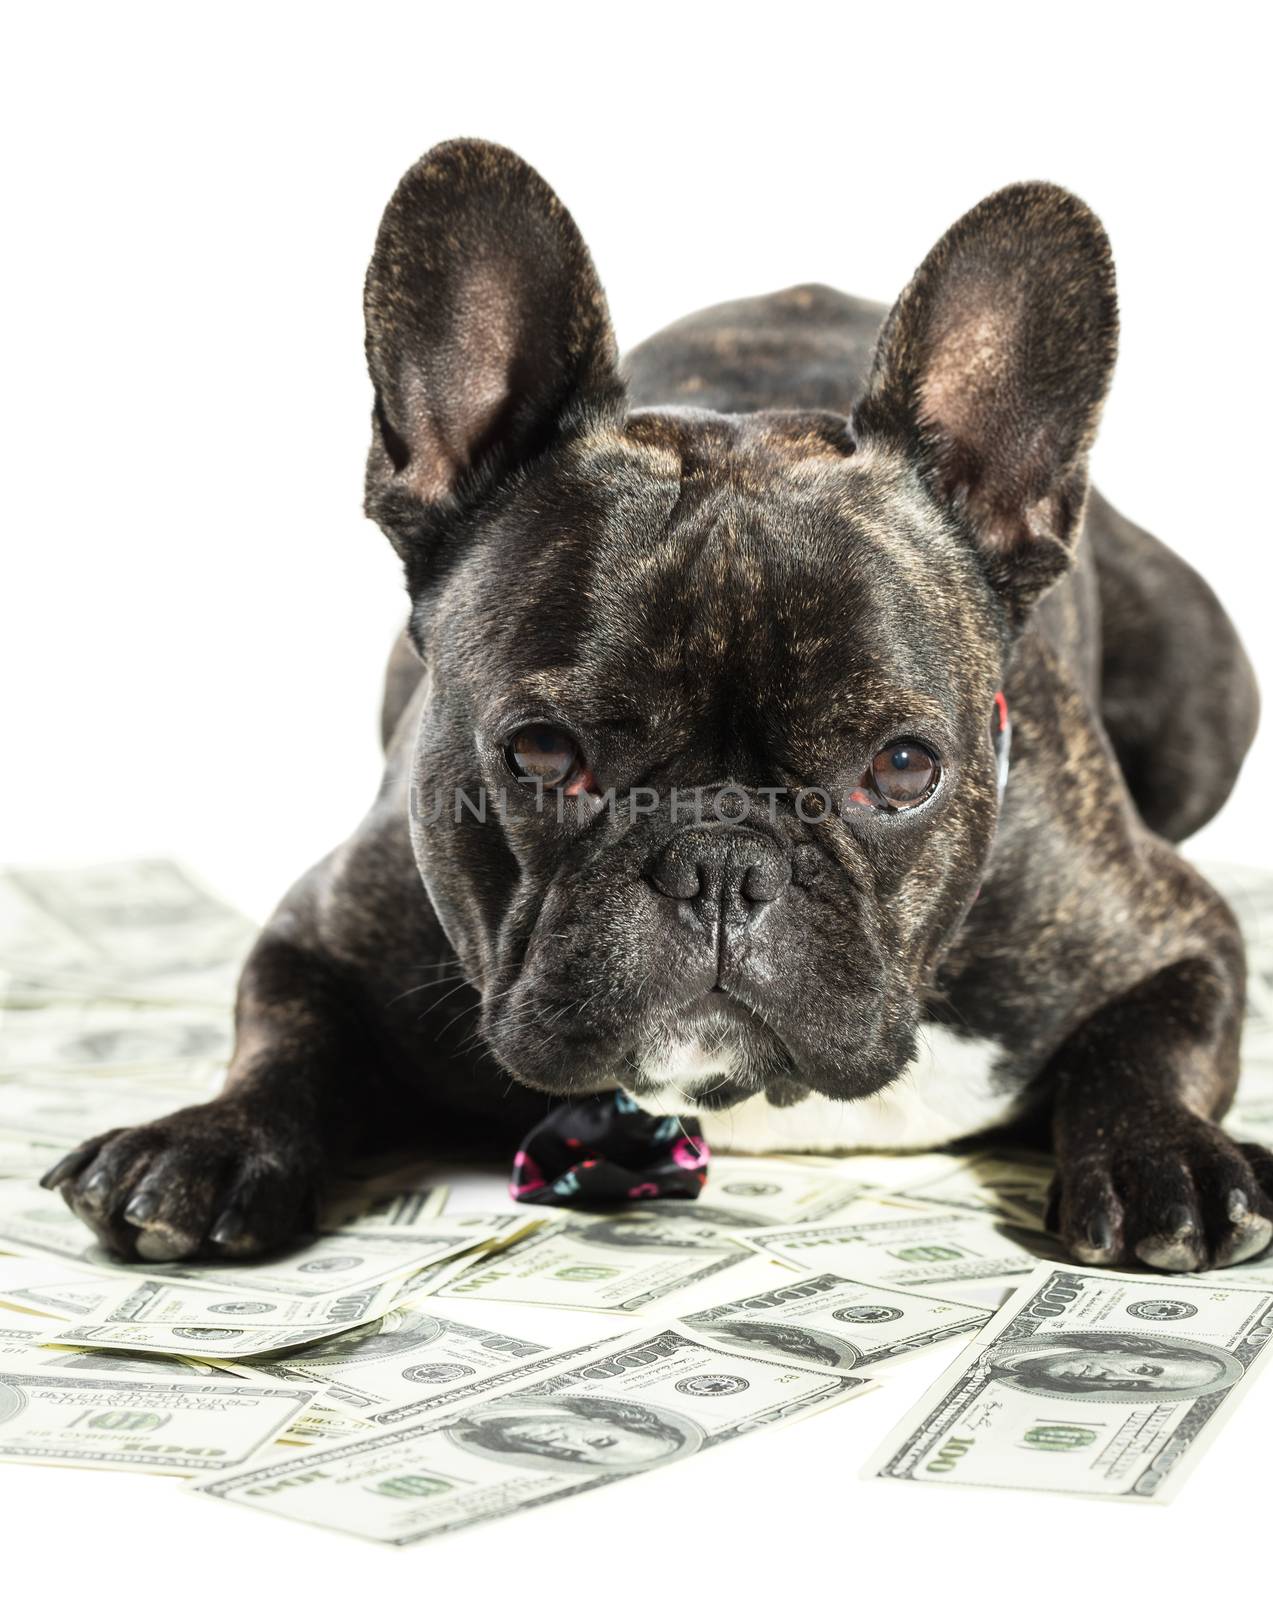 French bulldog dog lying on money banknotes